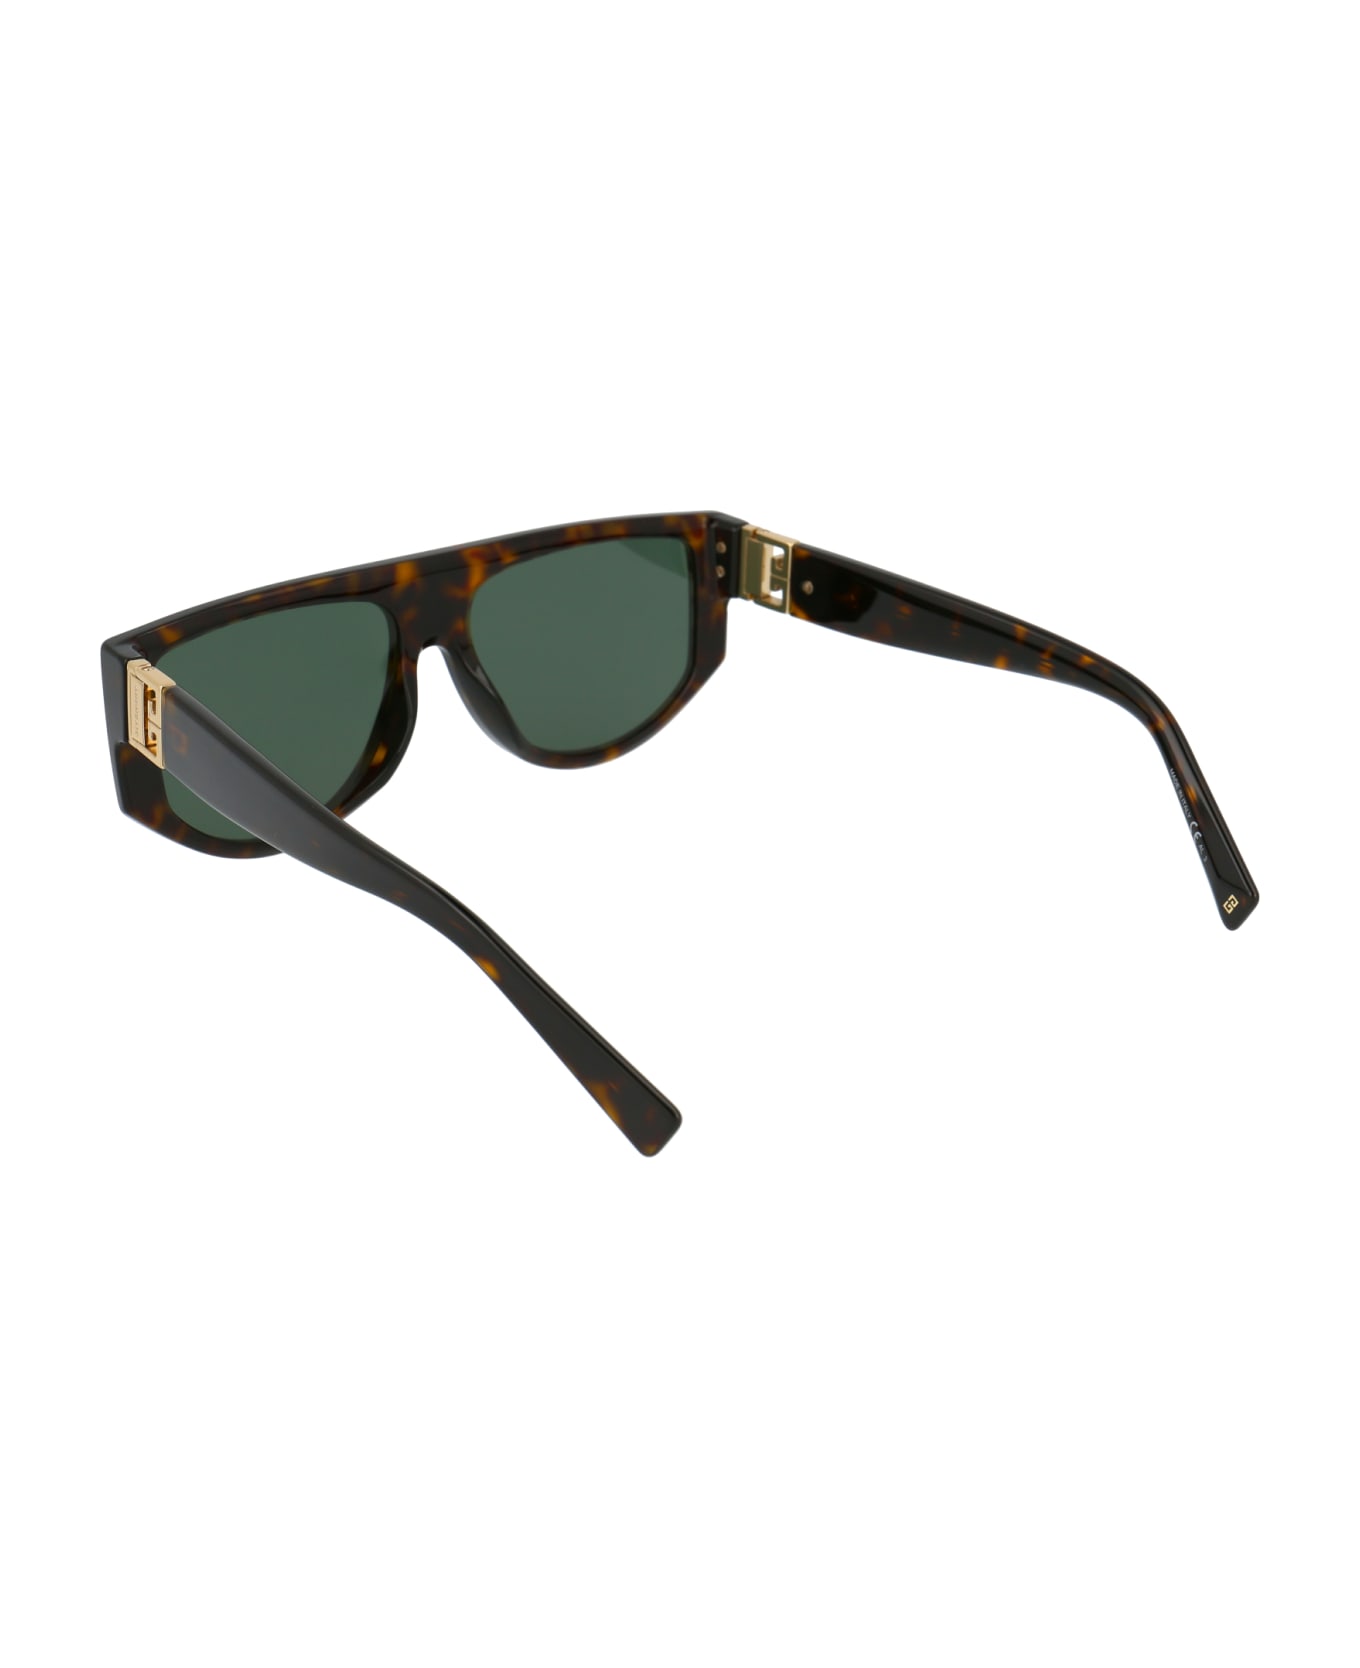 Givenchy Eyewear Gv 7156/s Sunglasses - 086QT HVN